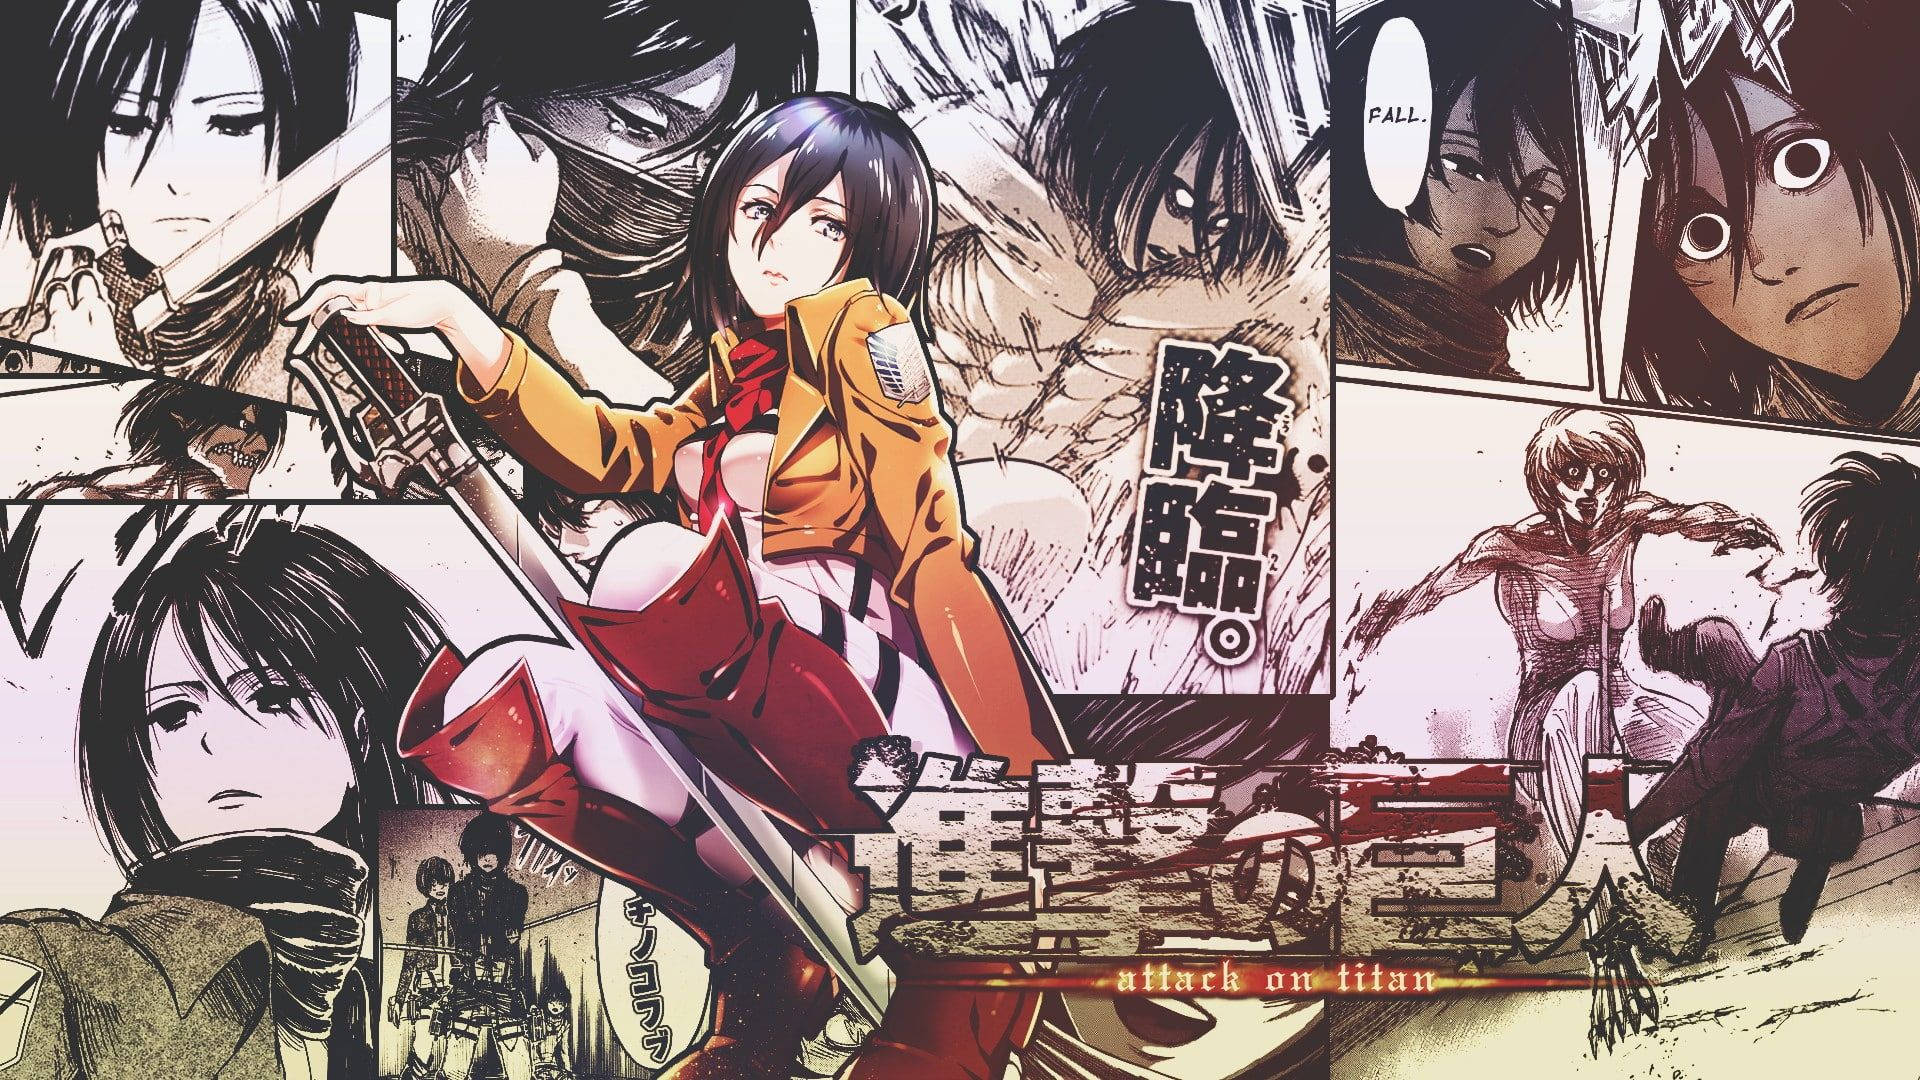 Mikasa Ackerman Manga Panel